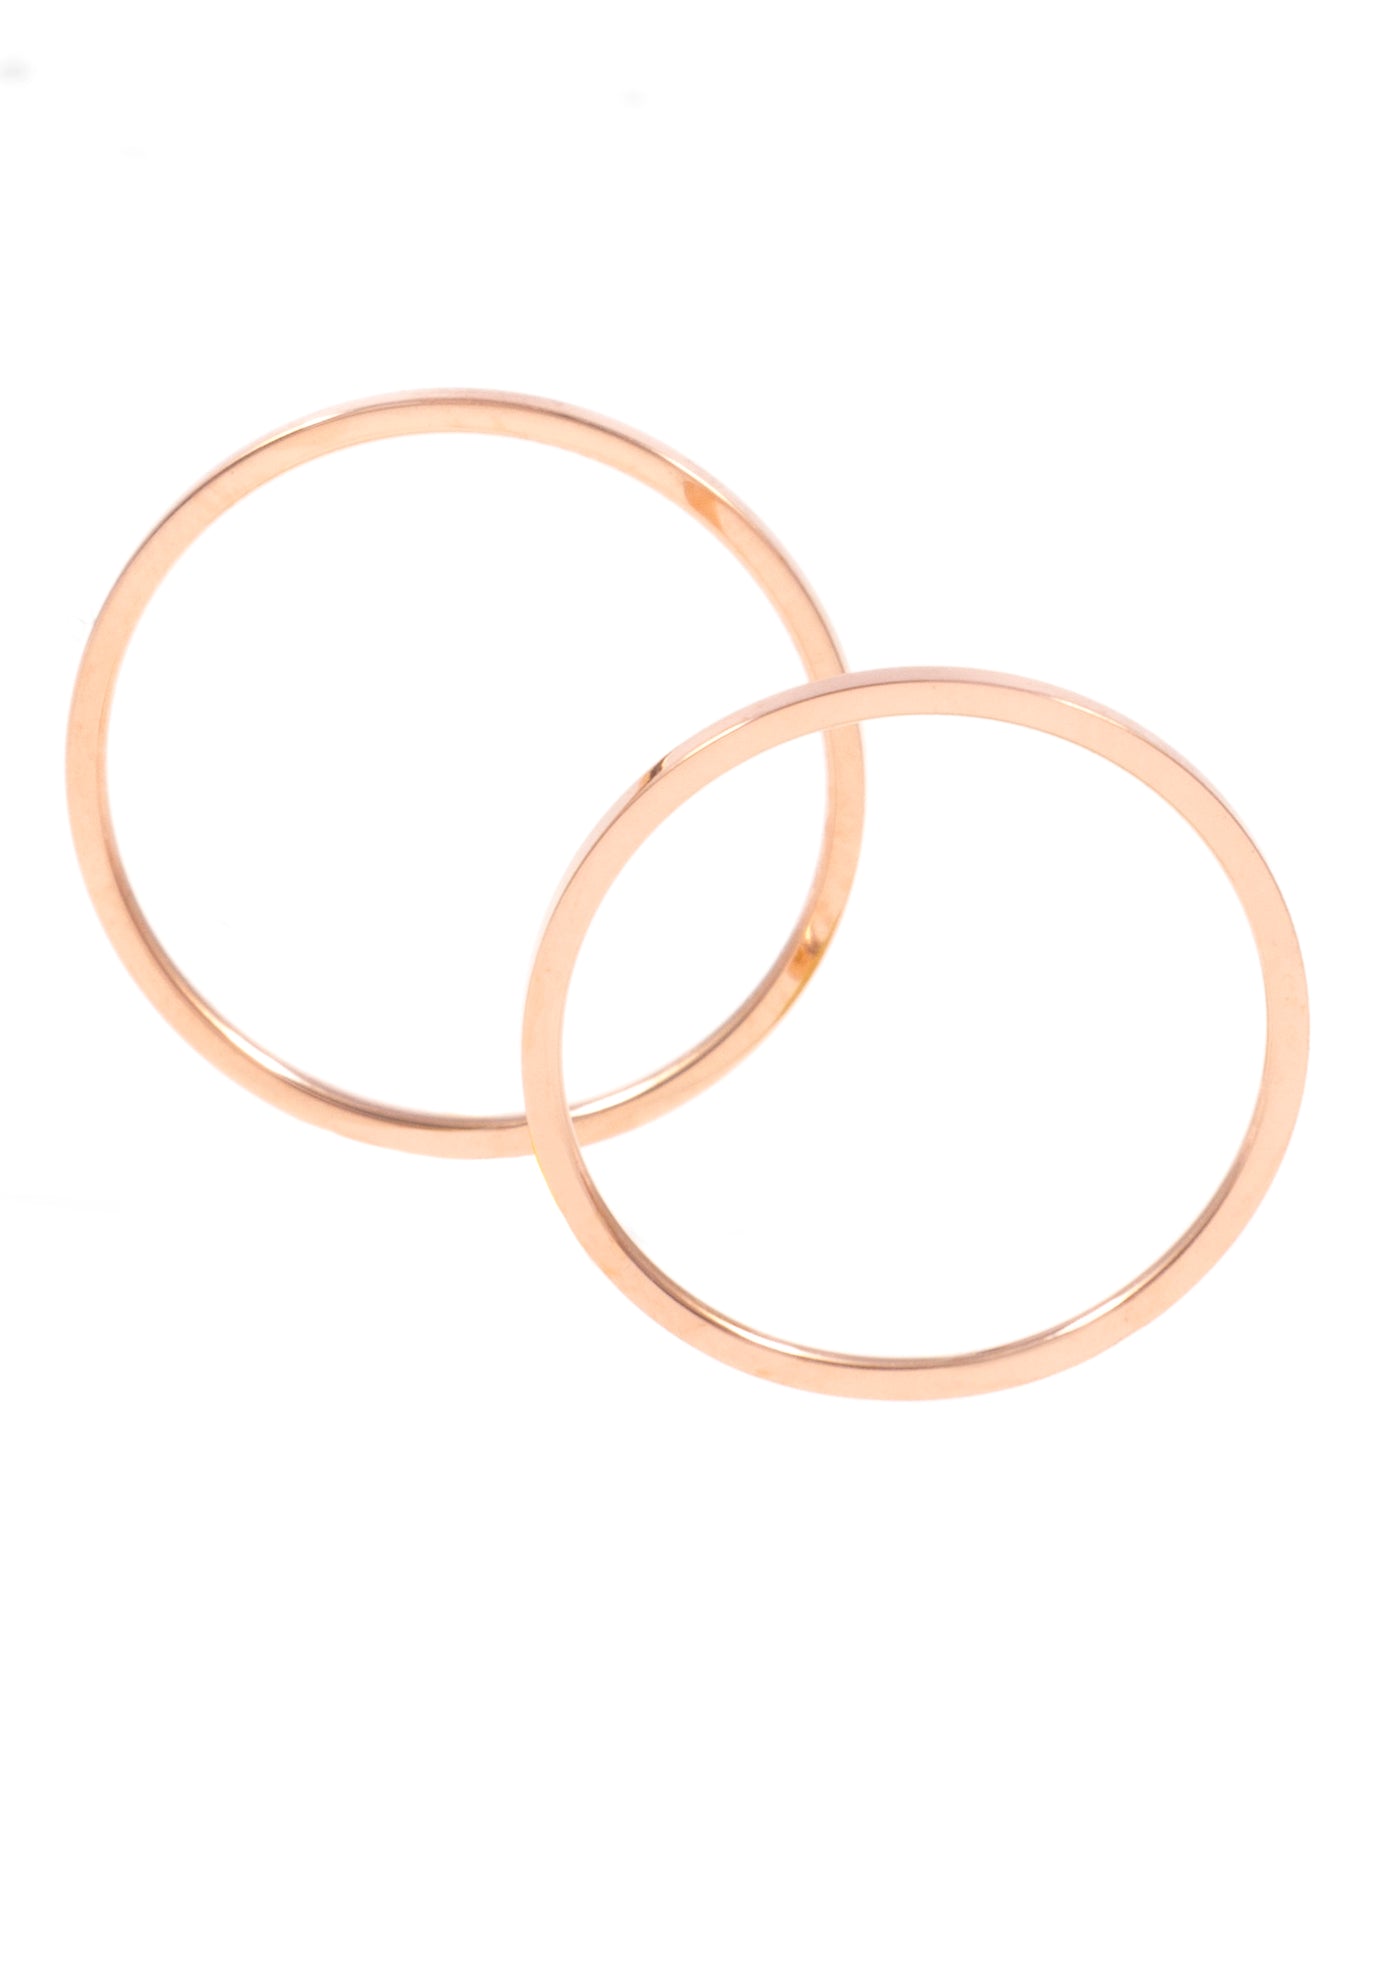 Stainless Steel Ring Set Rose Gold